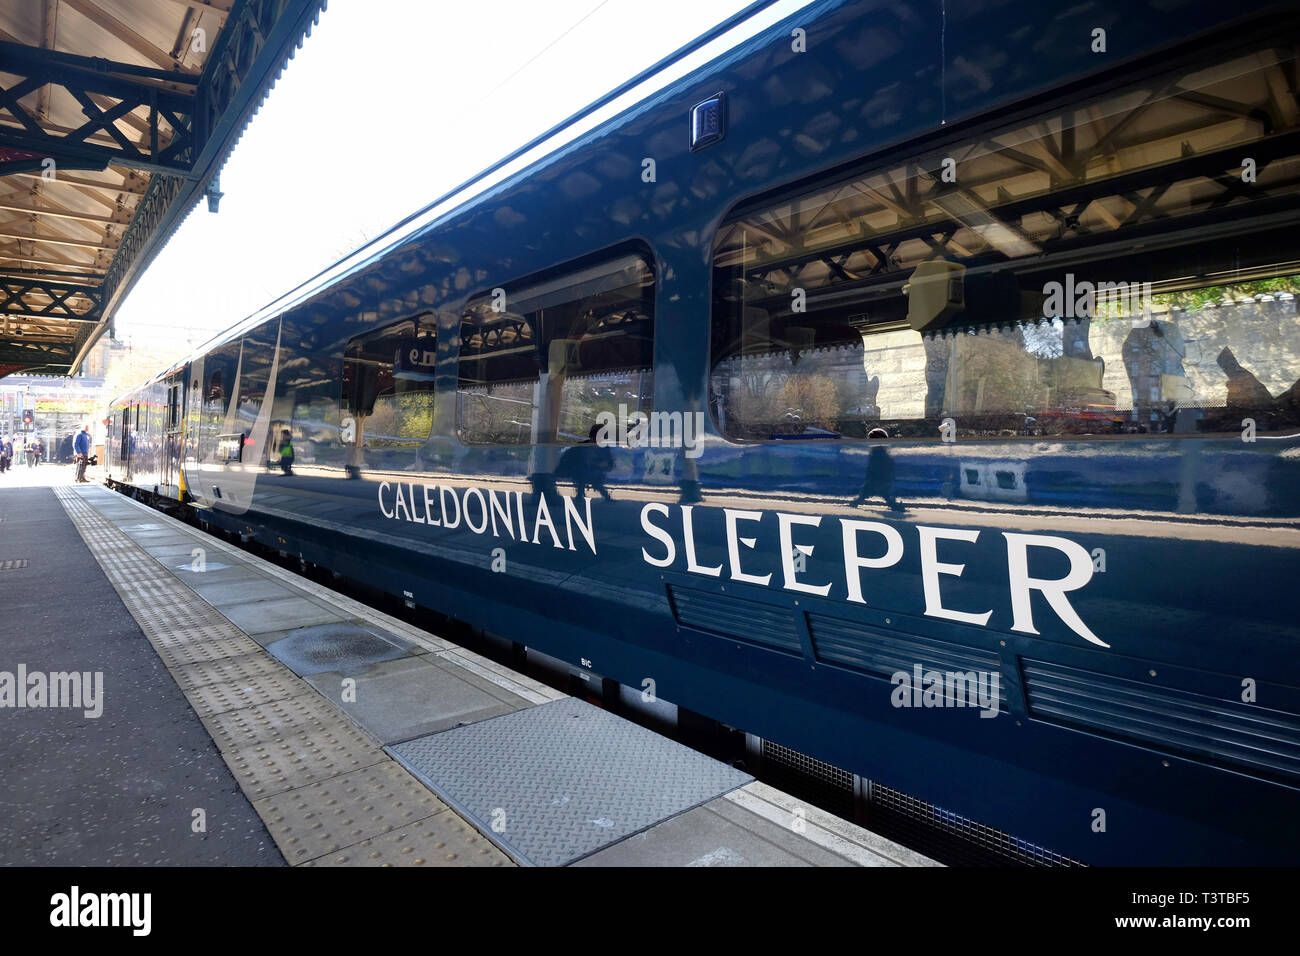 Ein Caledonian Sleeper Zug am Bahnhof Edinburgh Waverley. Stockfoto